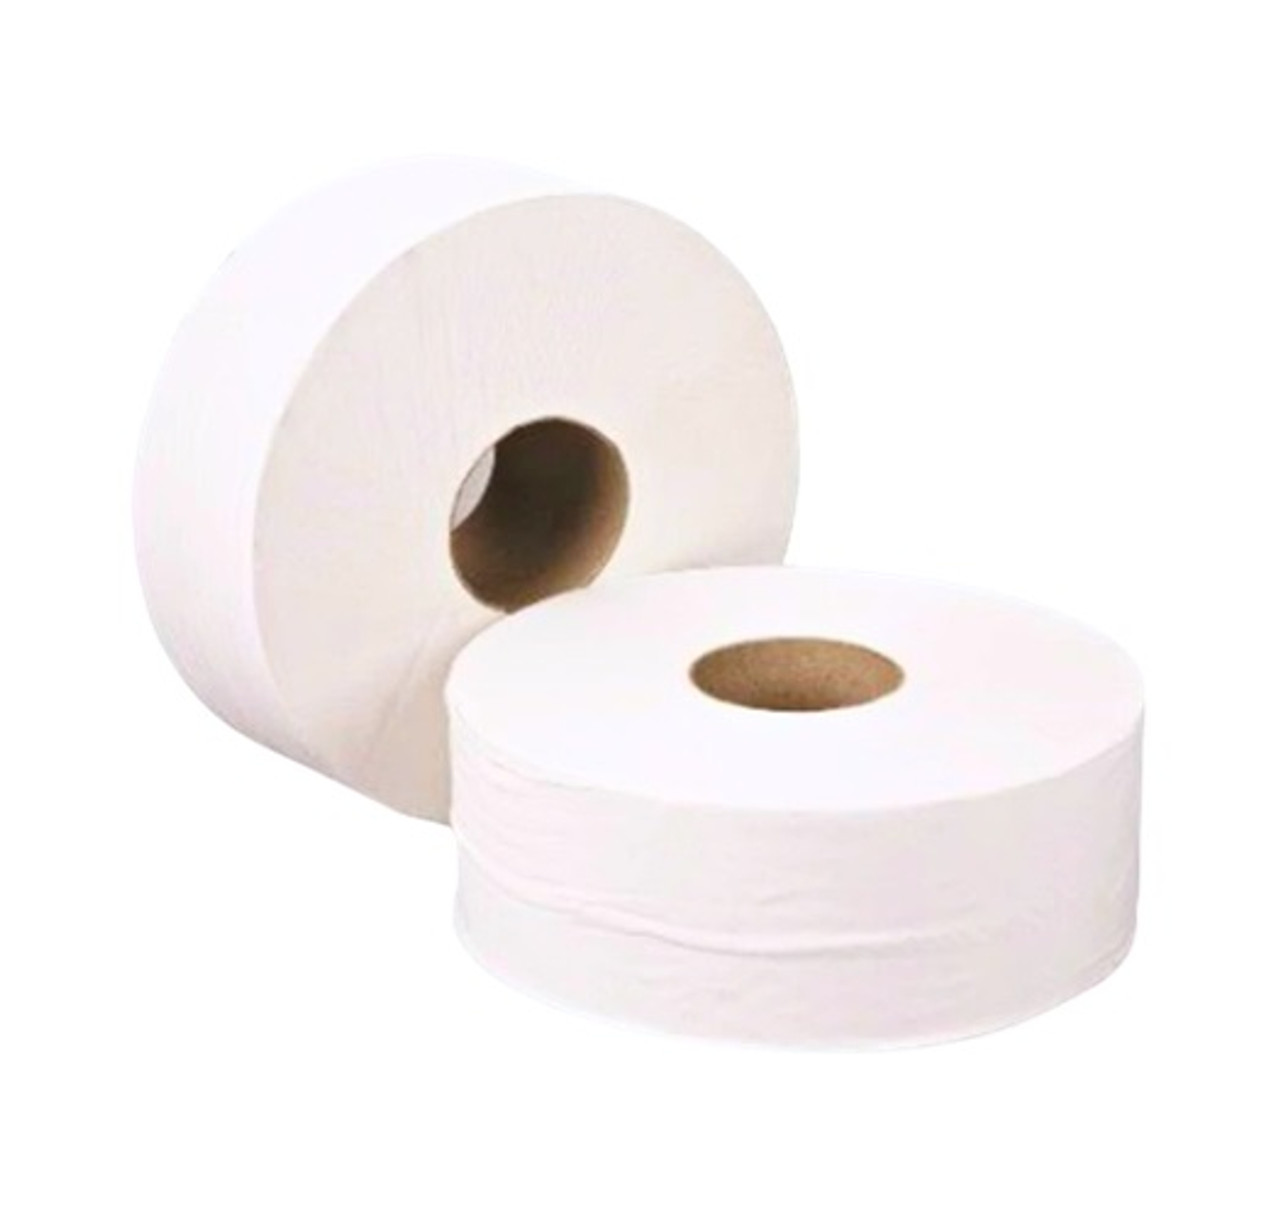 Leonardo Jumbo Toilet Rolls 2 Ply White with 3" core - Pack of 6